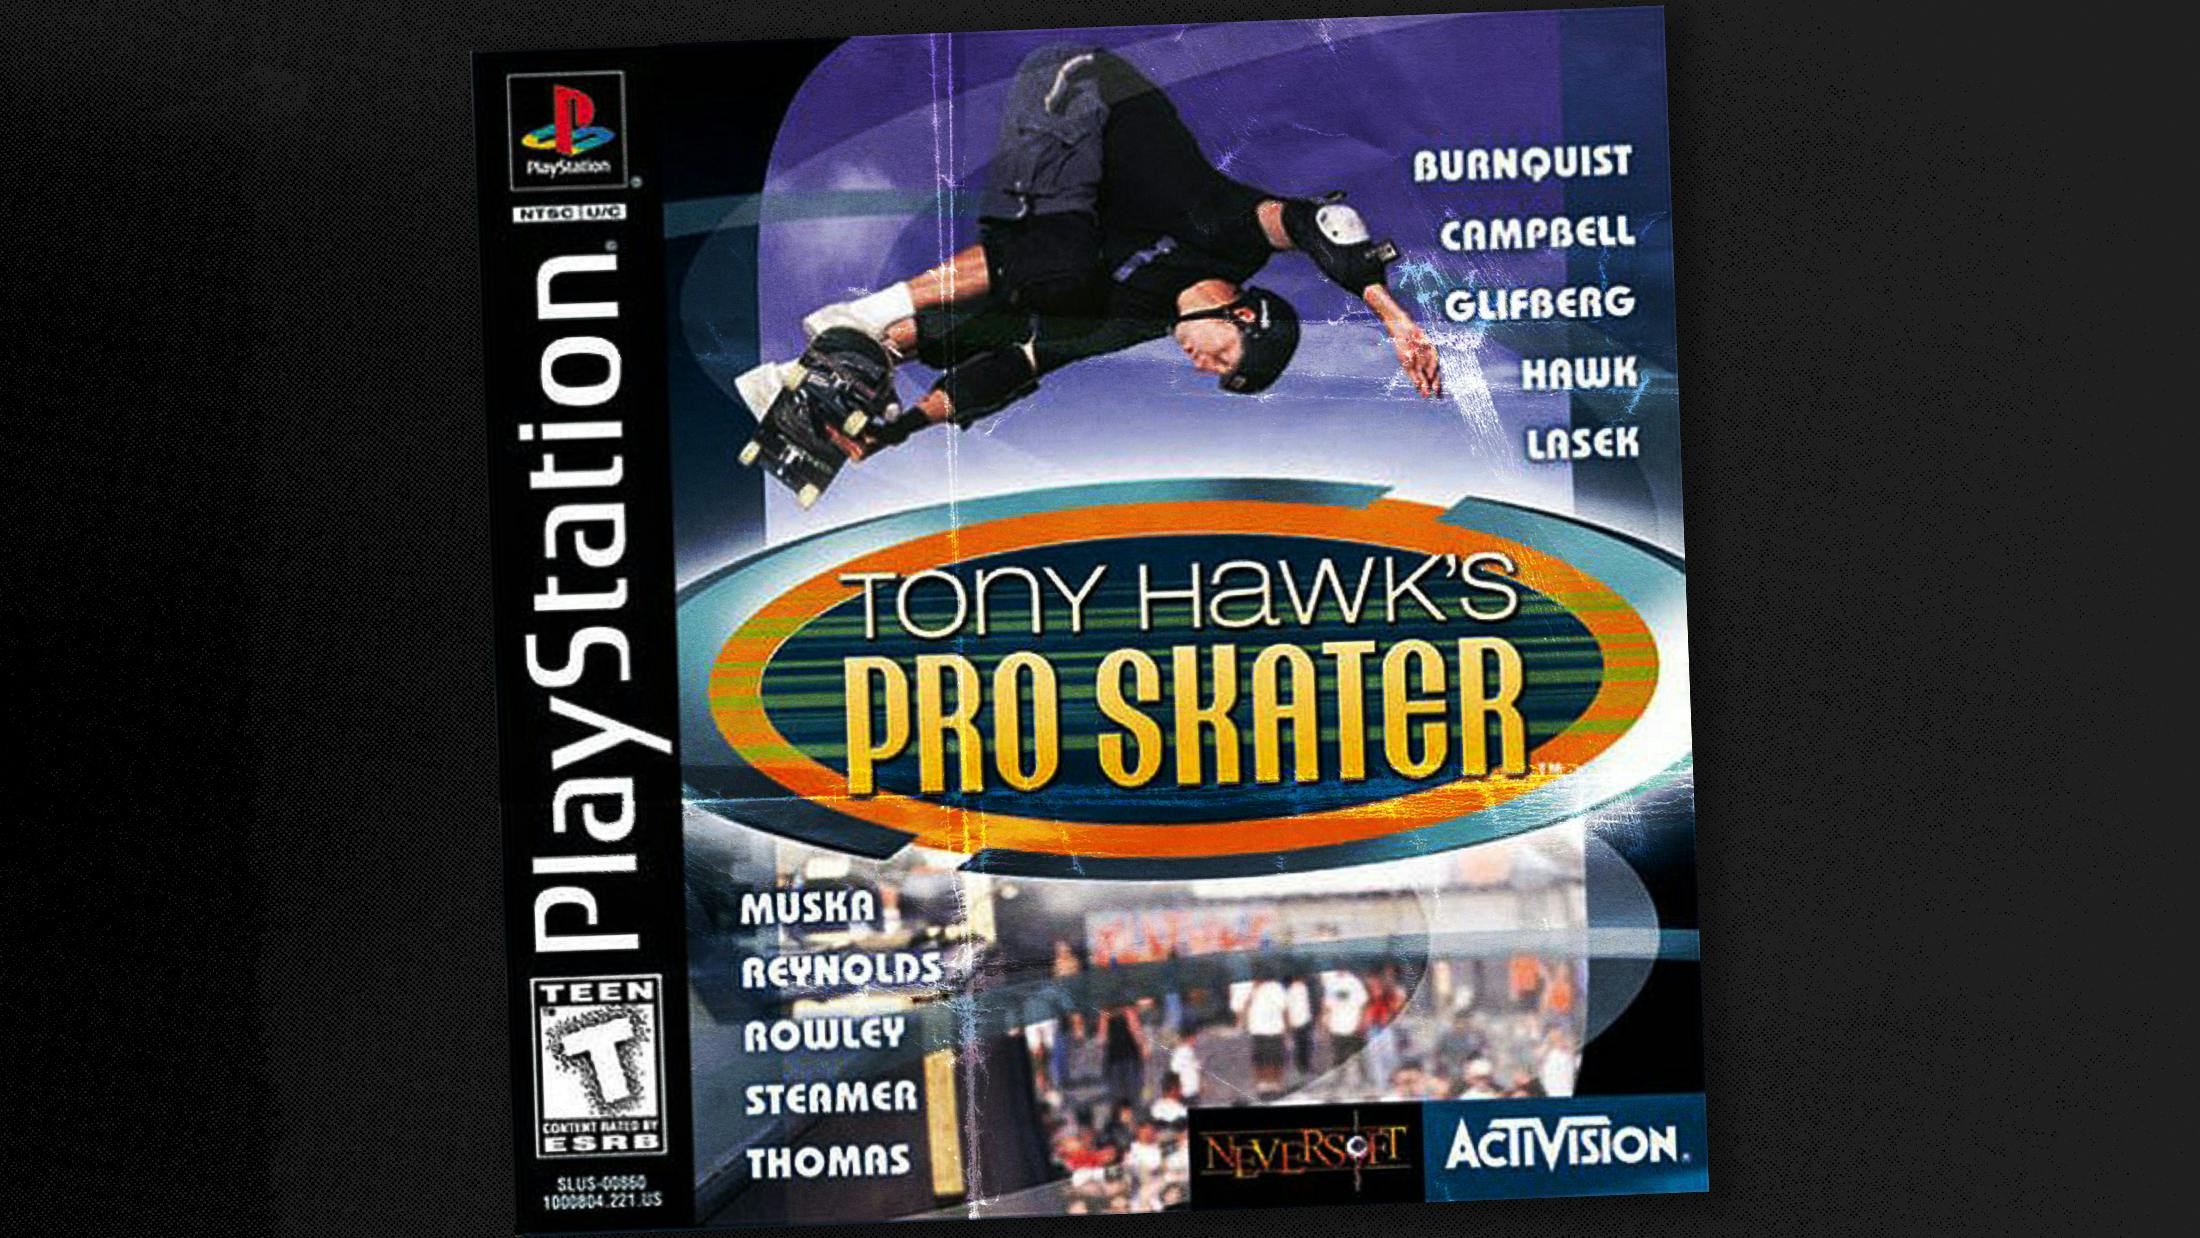 An oral history of the Tony Hawk's Pro Skater soundtrack, with Tony Hawk and Goldfinger’s John Feldmann